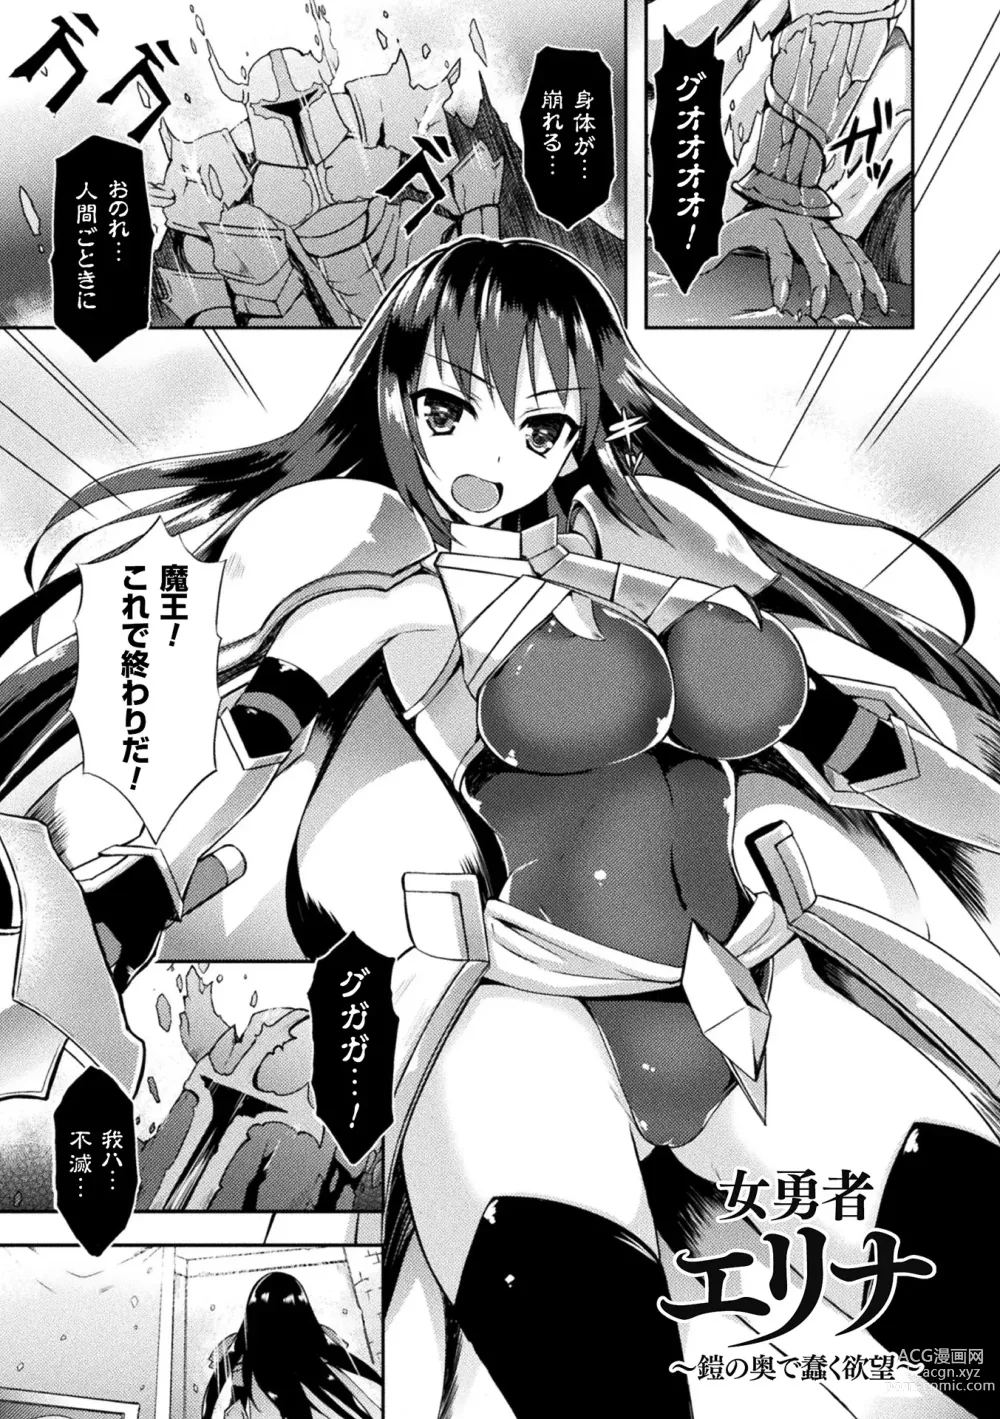 Page 5 of manga Tentacle Holic